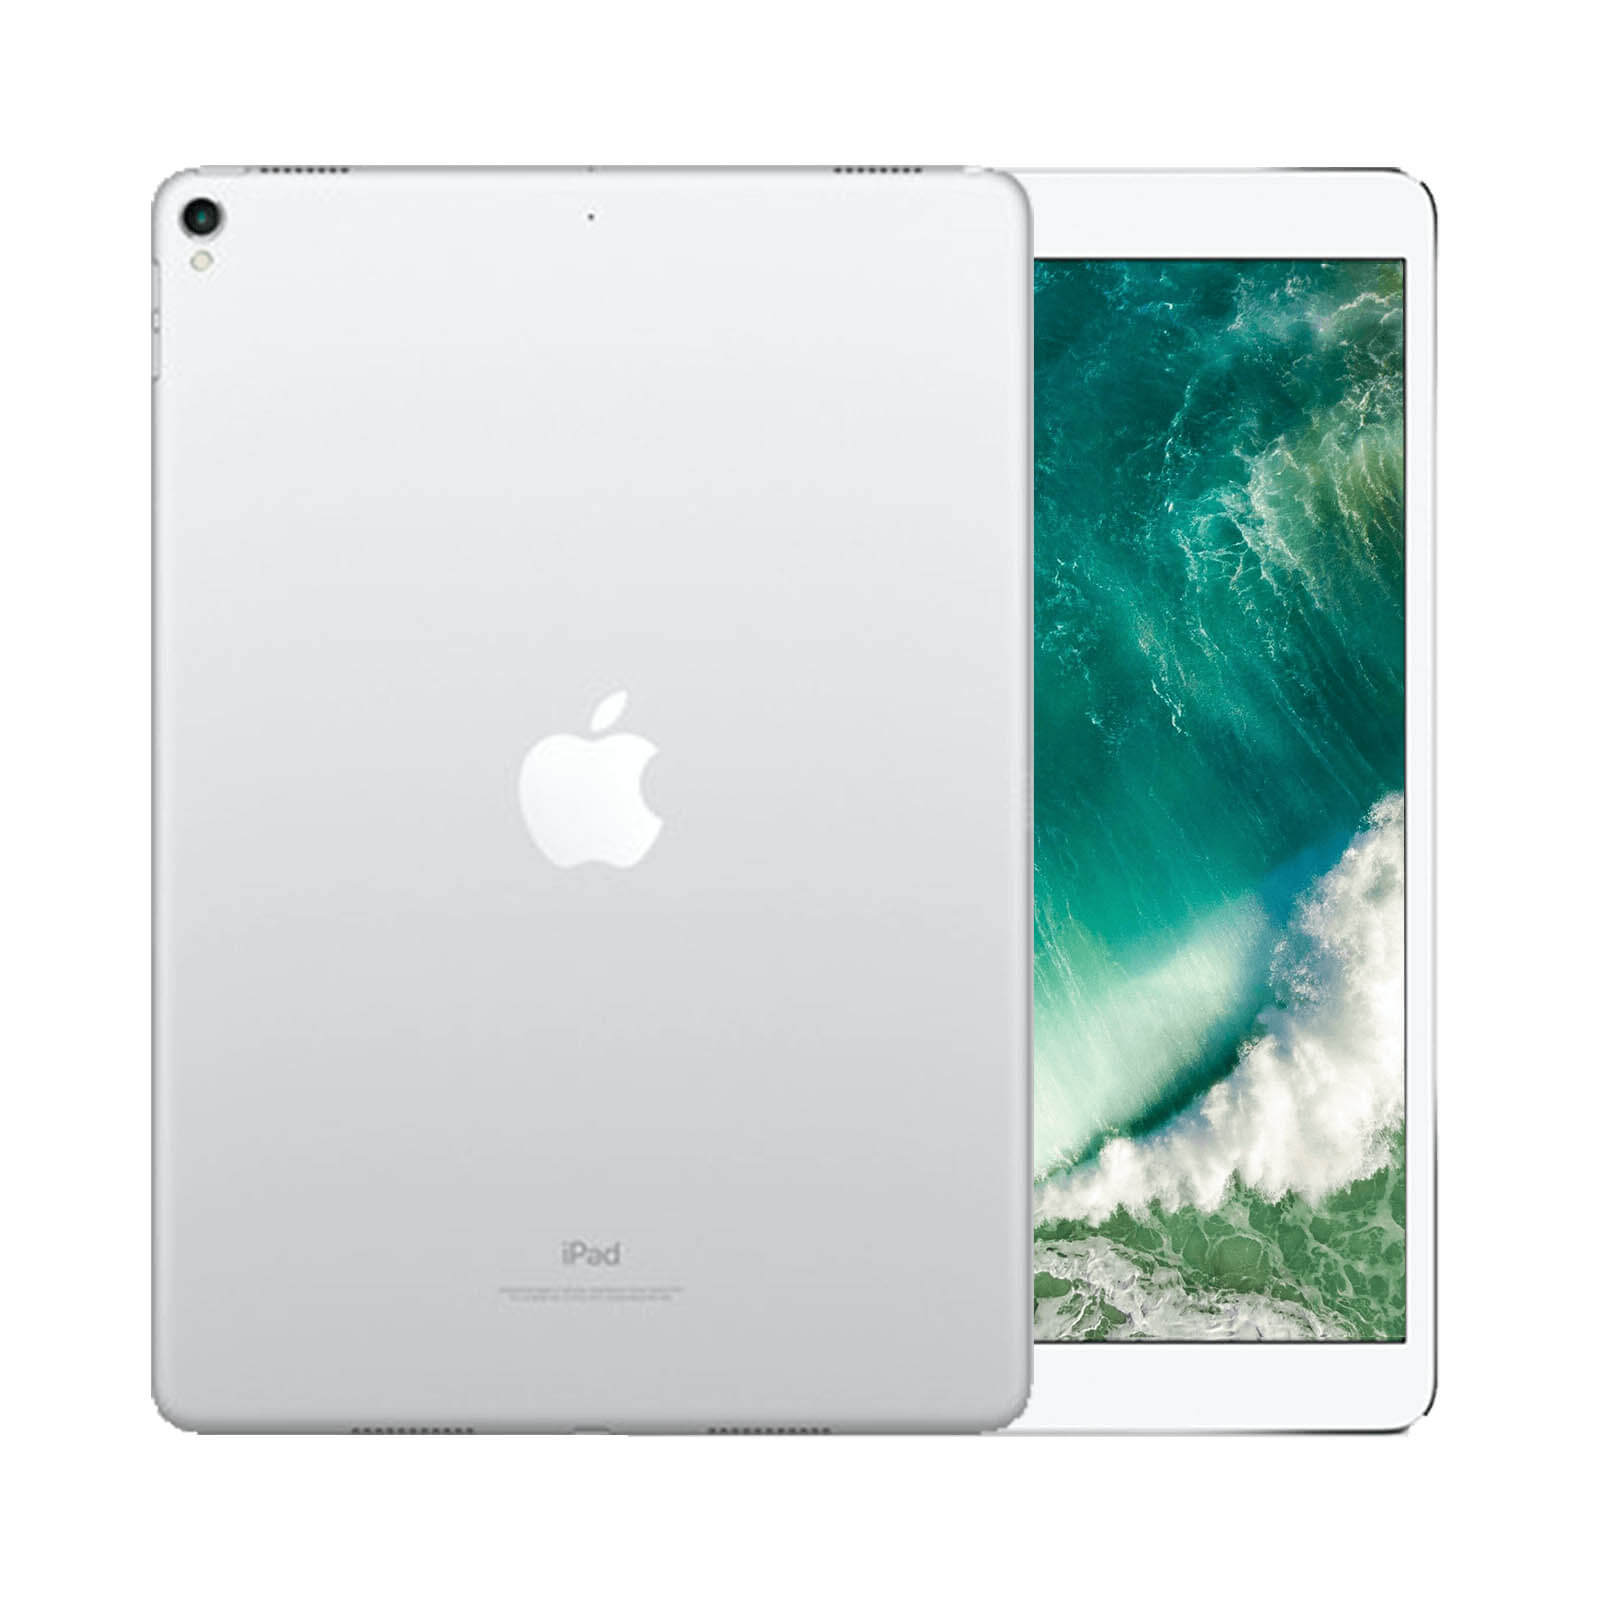 iPad Pro 11 Inch 256GB Space Grey Very Good - WiFi